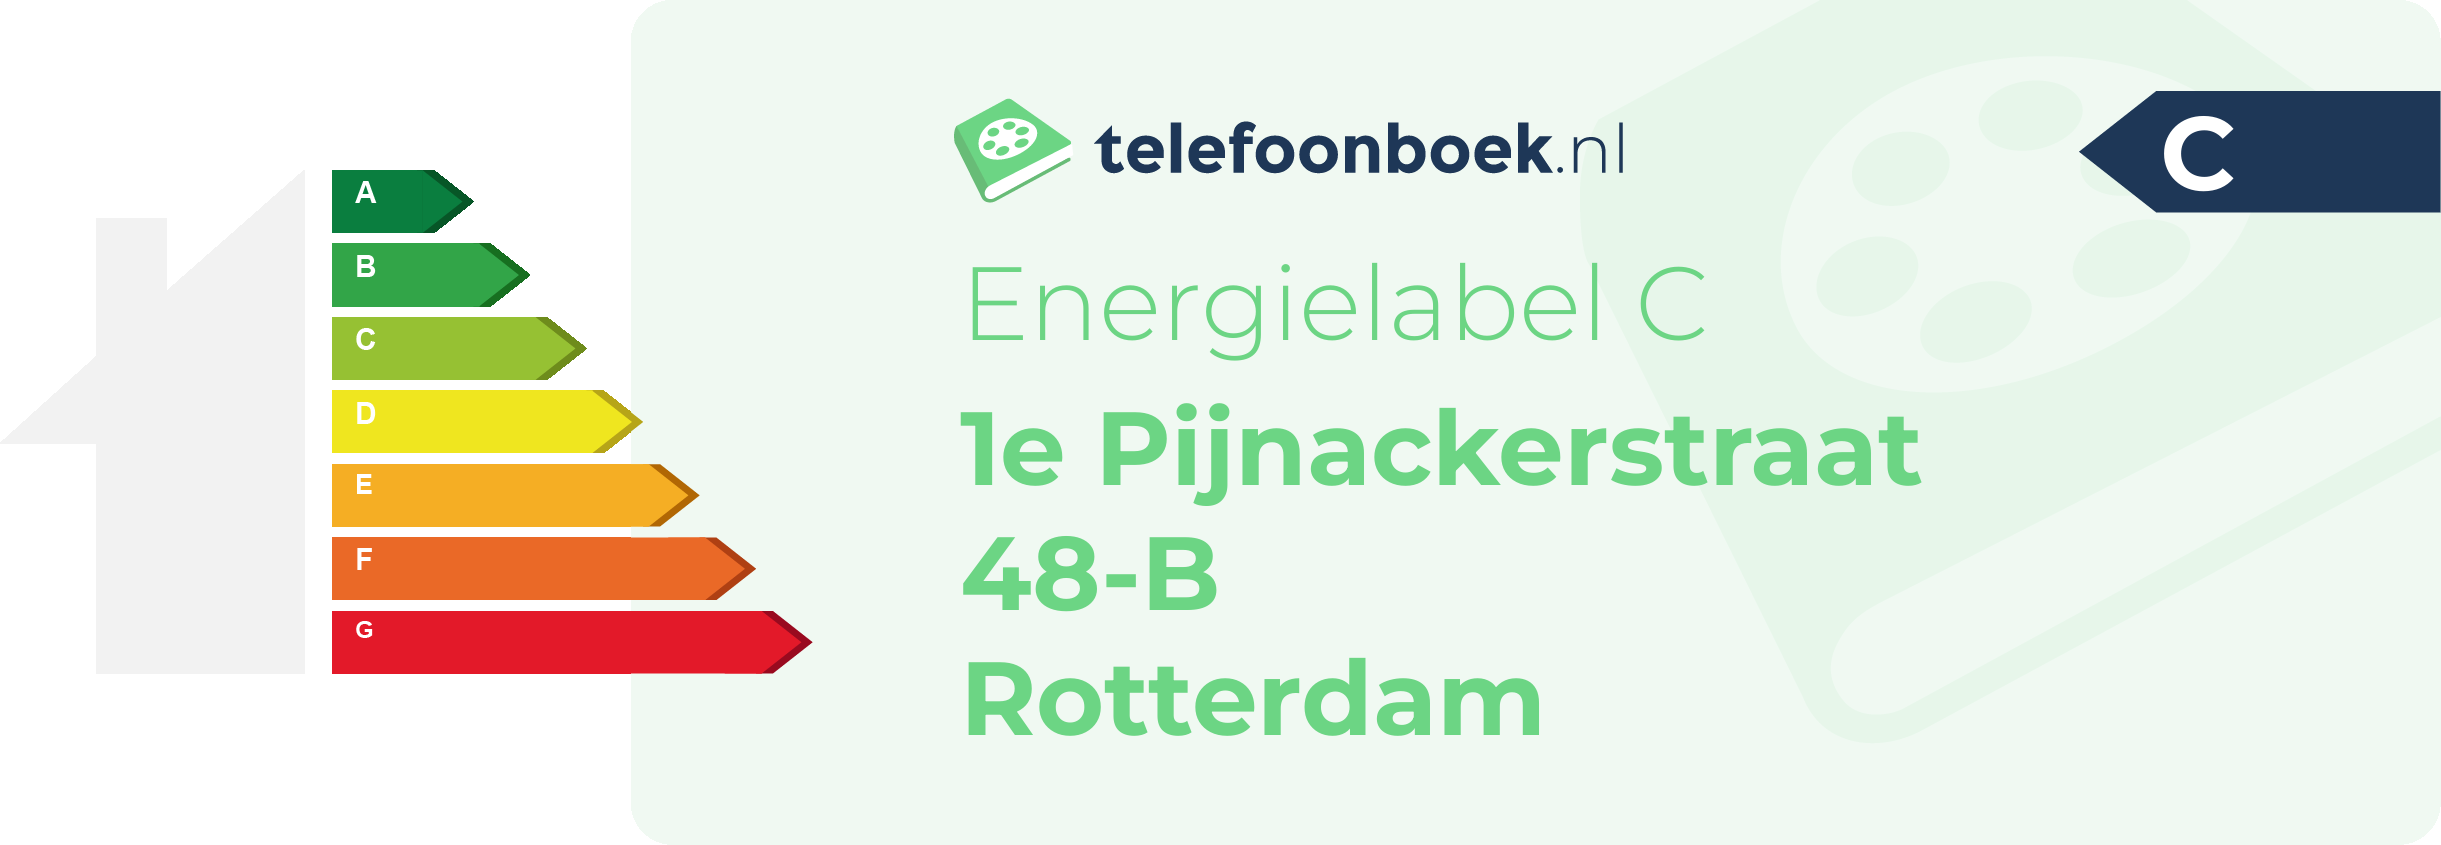 Energielabel 1e Pijnackerstraat 48-B Rotterdam